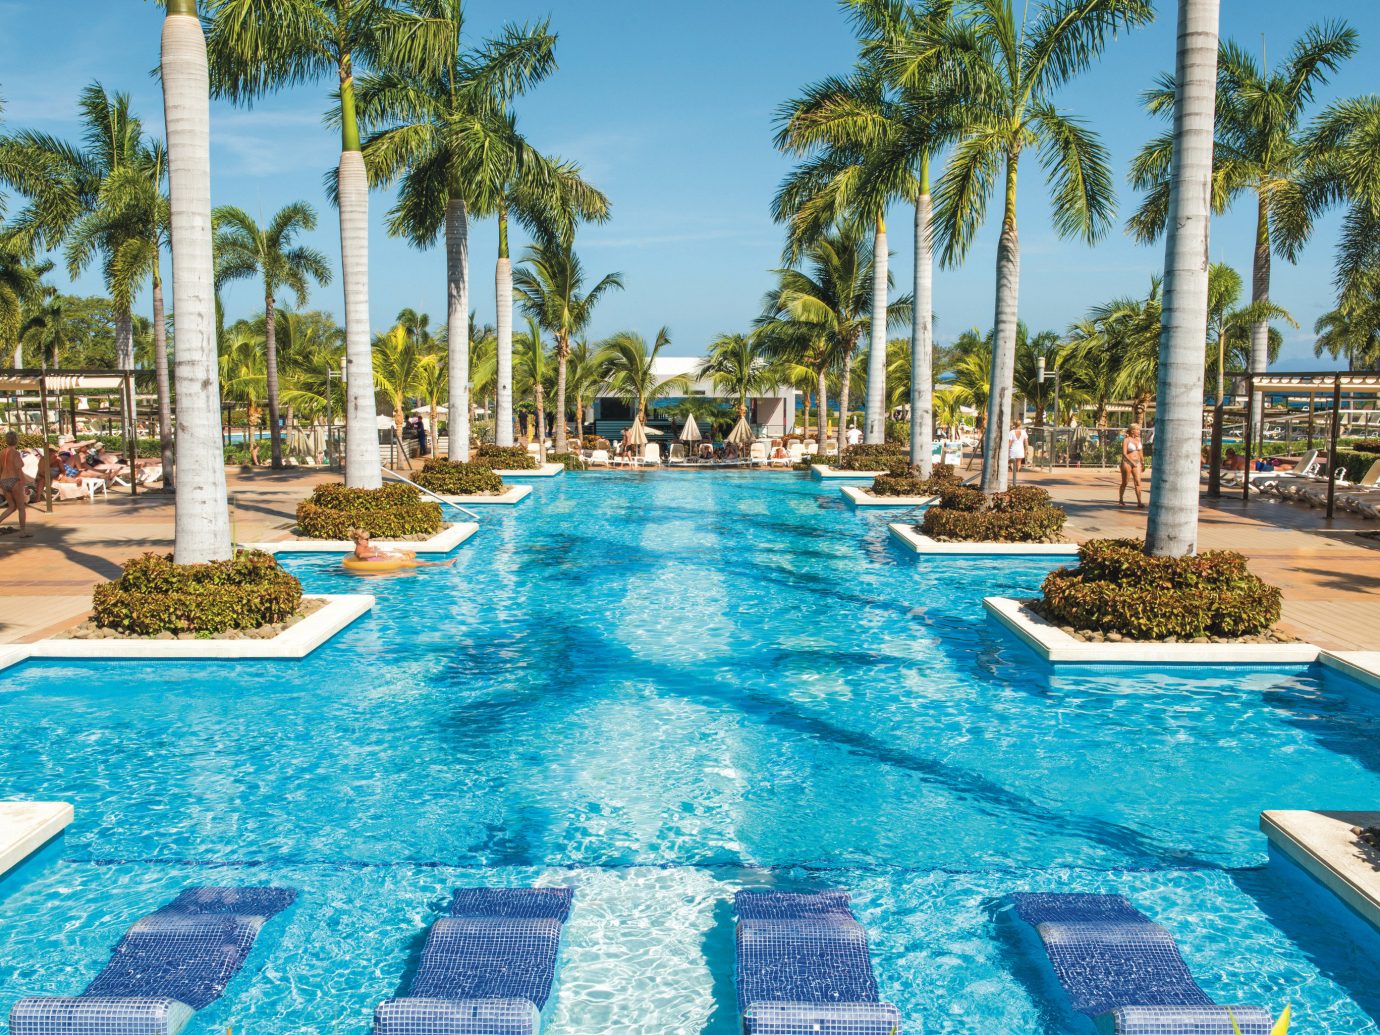 Pool at Hotel Riu Palace Costa Rica, Guanacaste